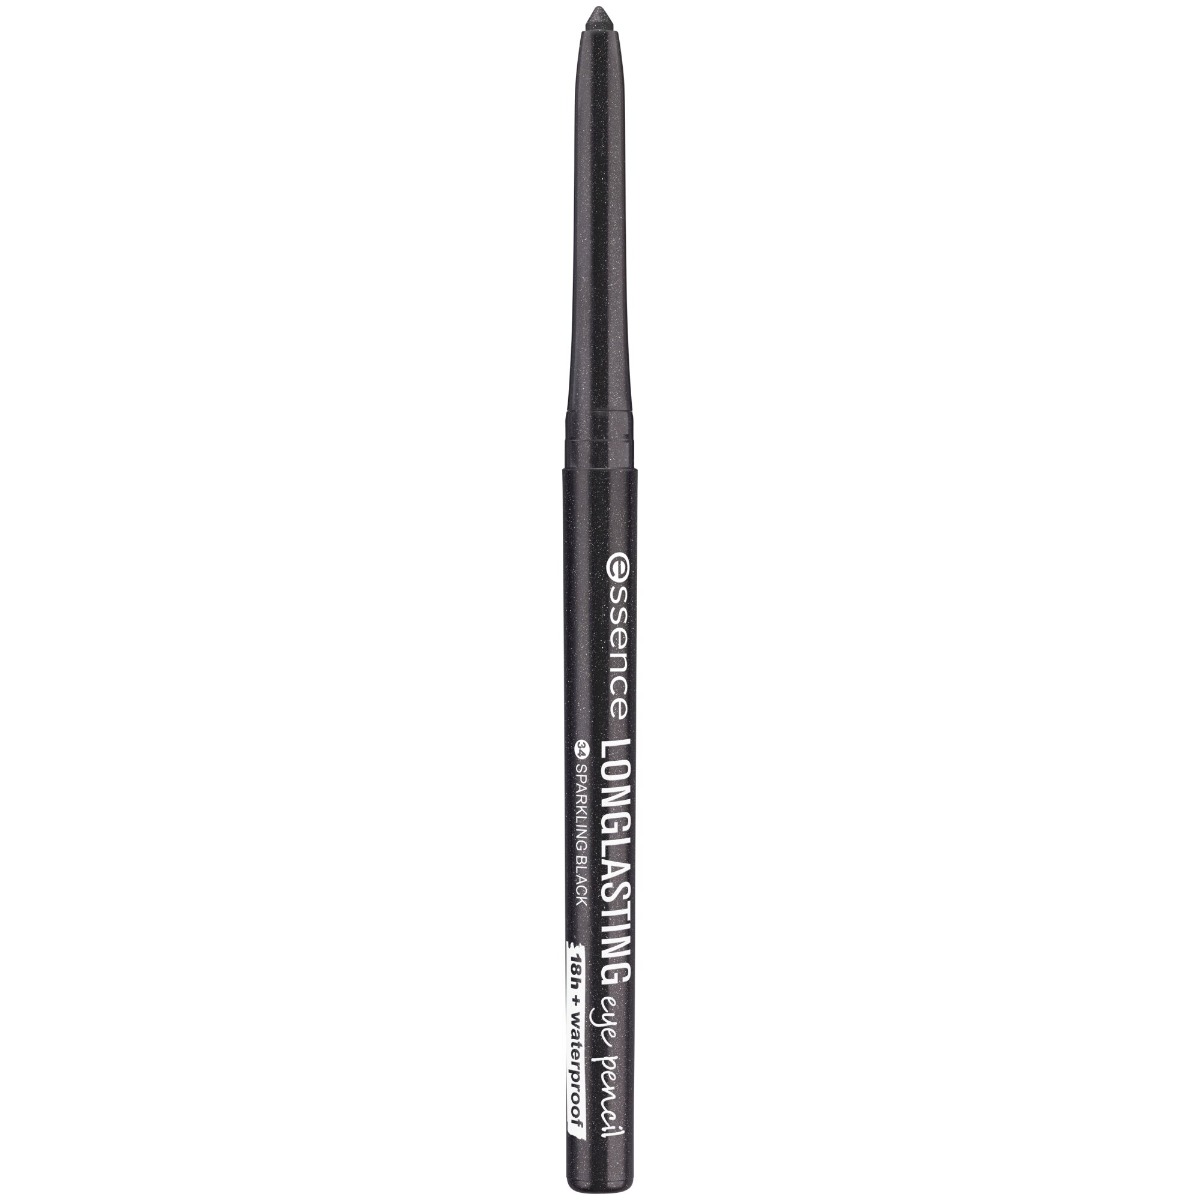 Creion pentru ochi Long-Lasting 34 - Sparkling Black, 0.28g, Essence